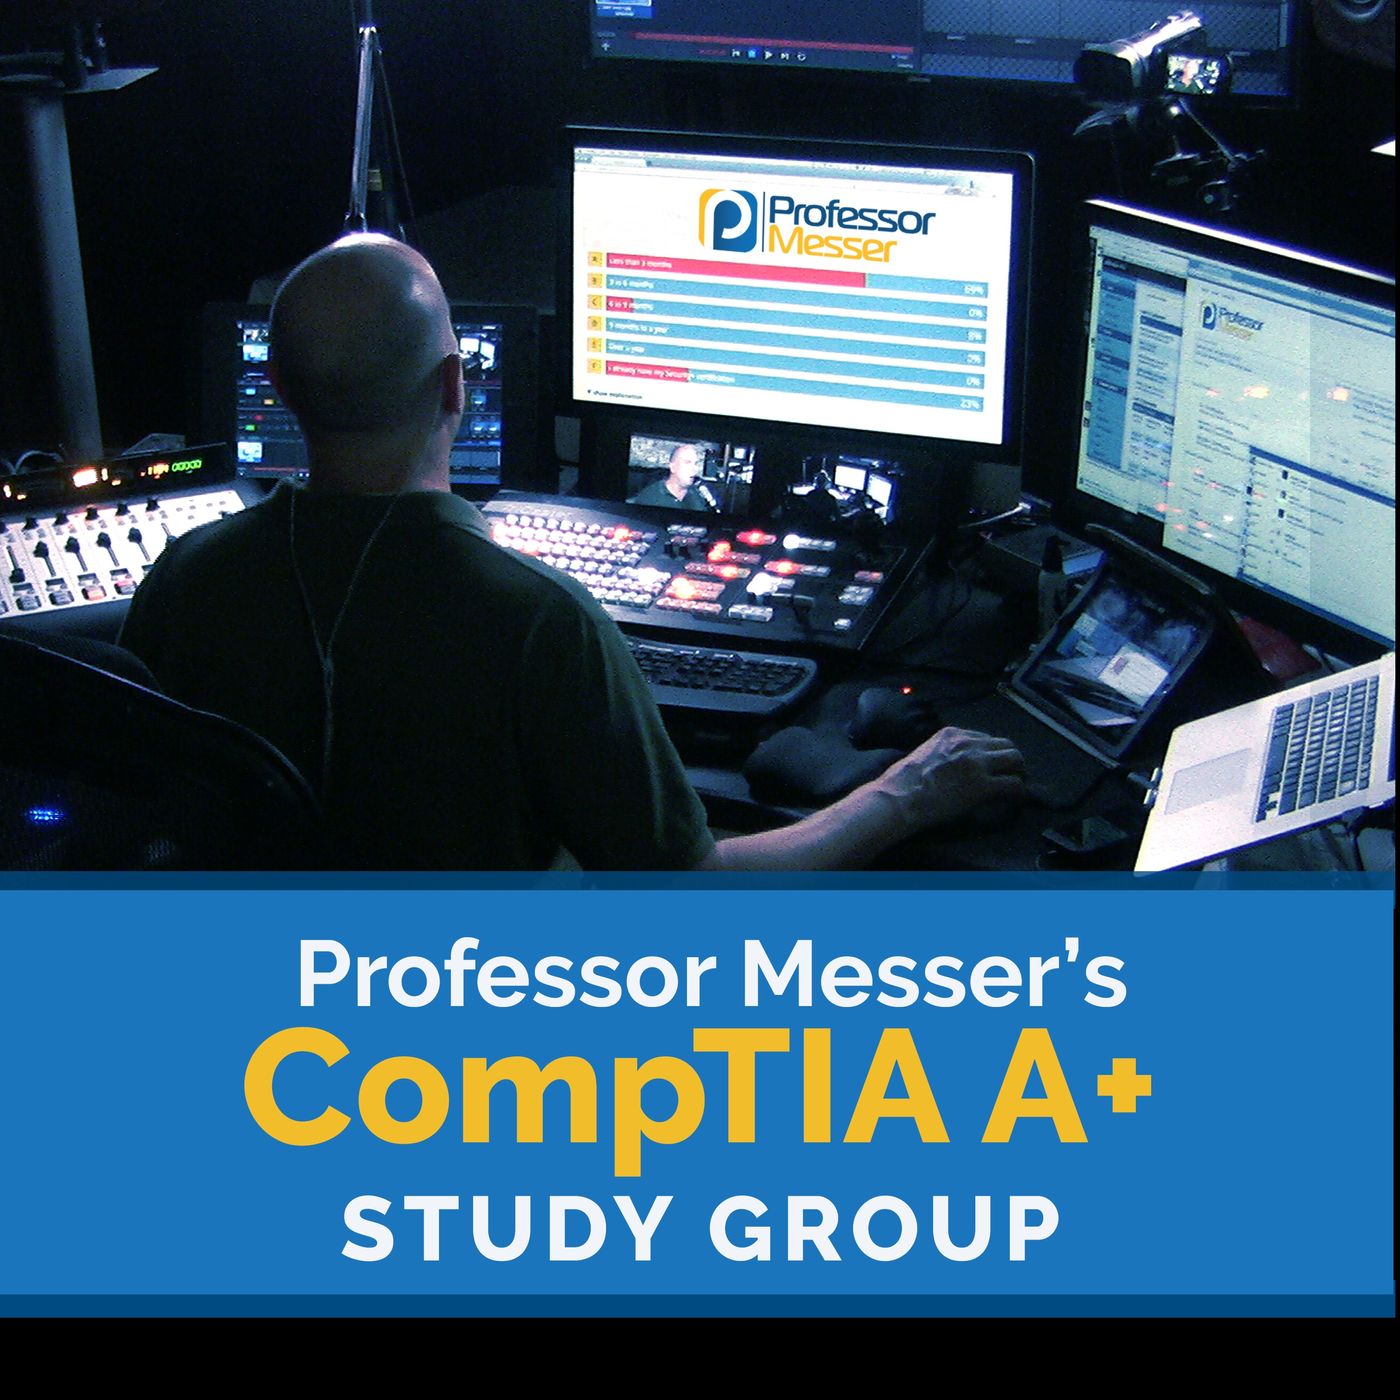 Professor Messer's CompTIA 220-1002 A+ Study Group - November 2020